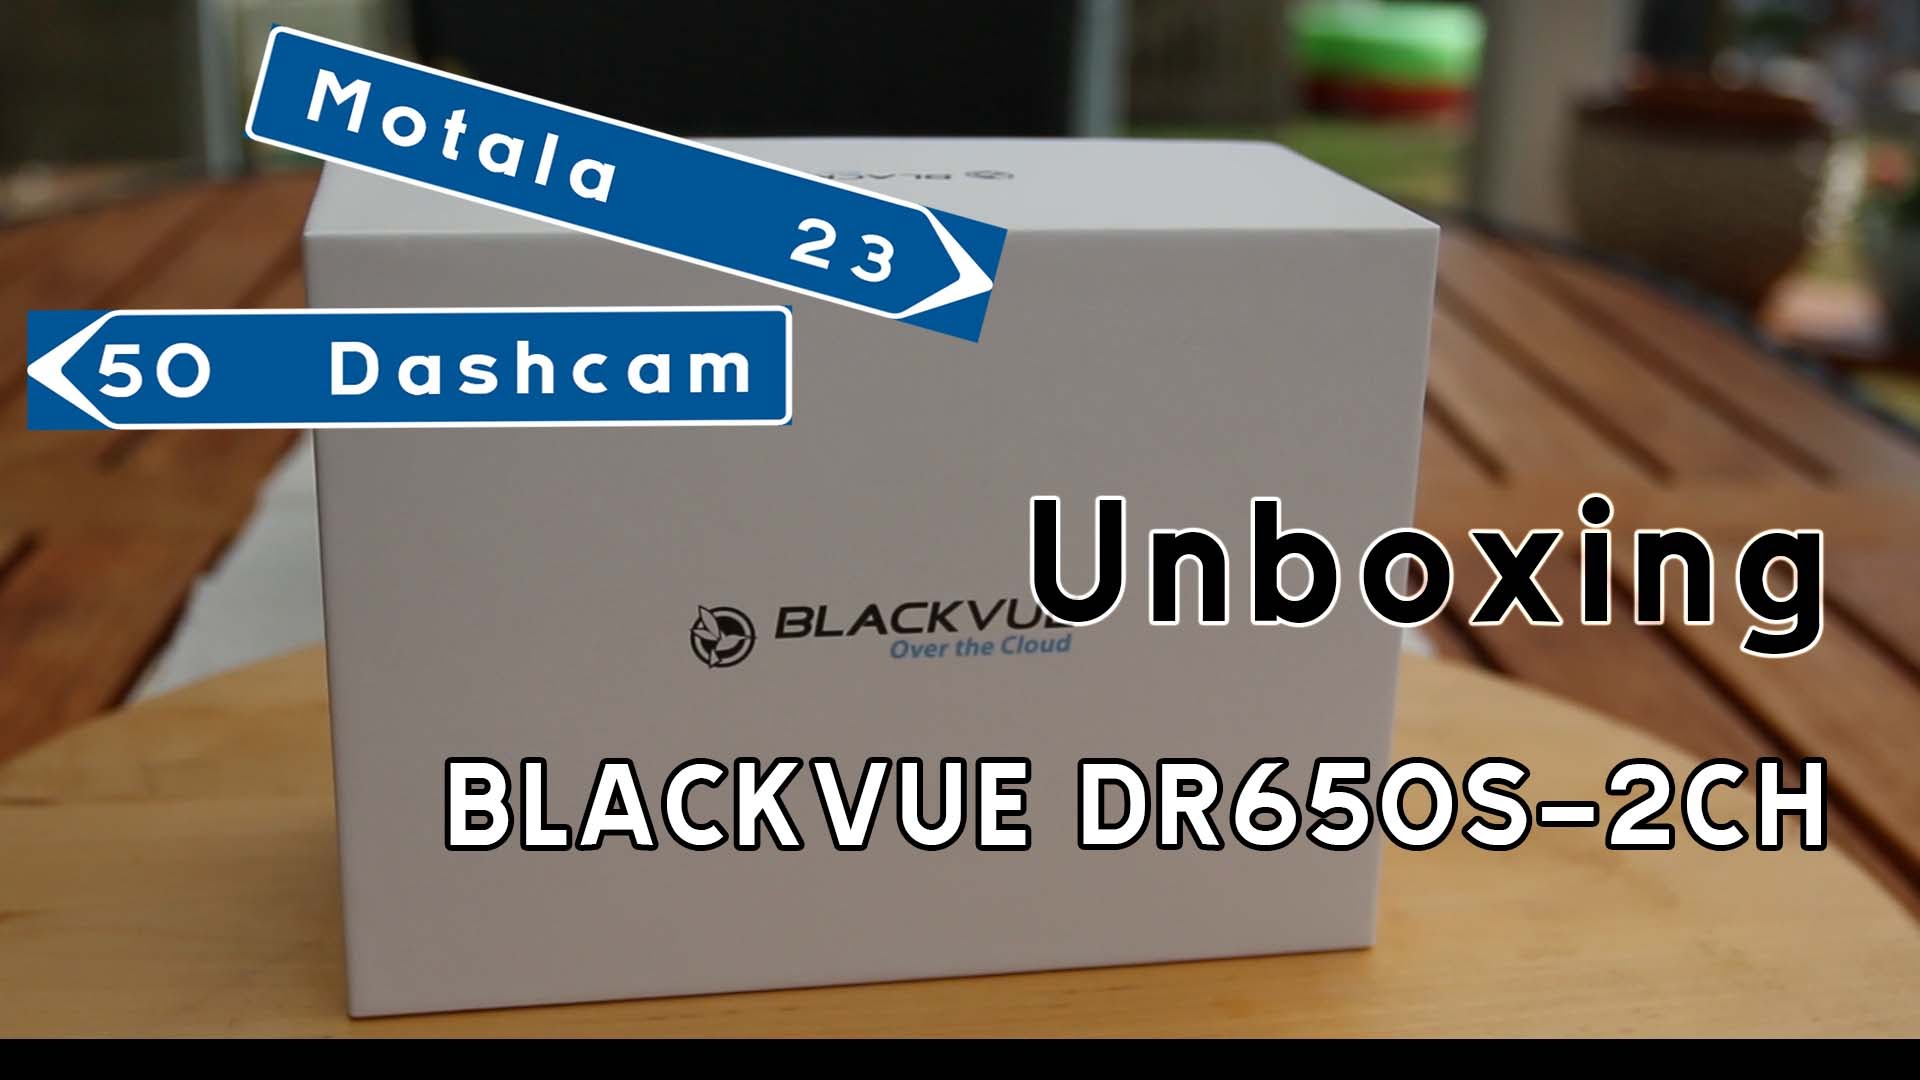 BlackVue DR650S-2CH Unboxing & Unusual Setup @ Motala Dashcam